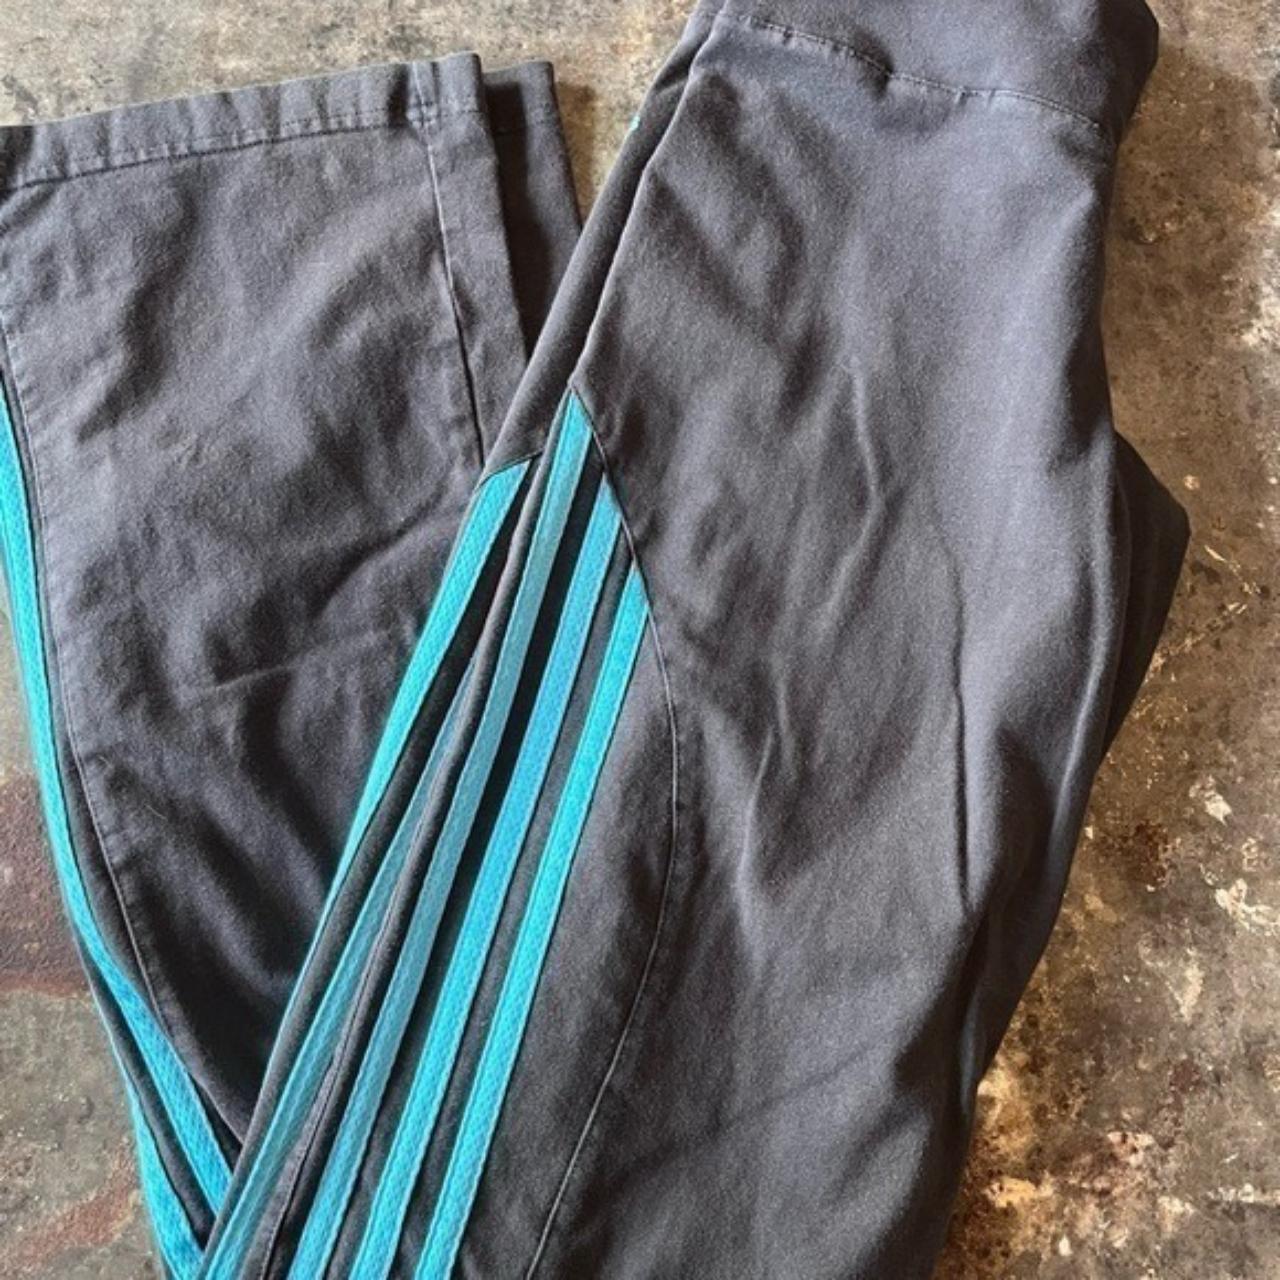 Product Image 3 - Adidas Sweatpants. 2010. Black fade